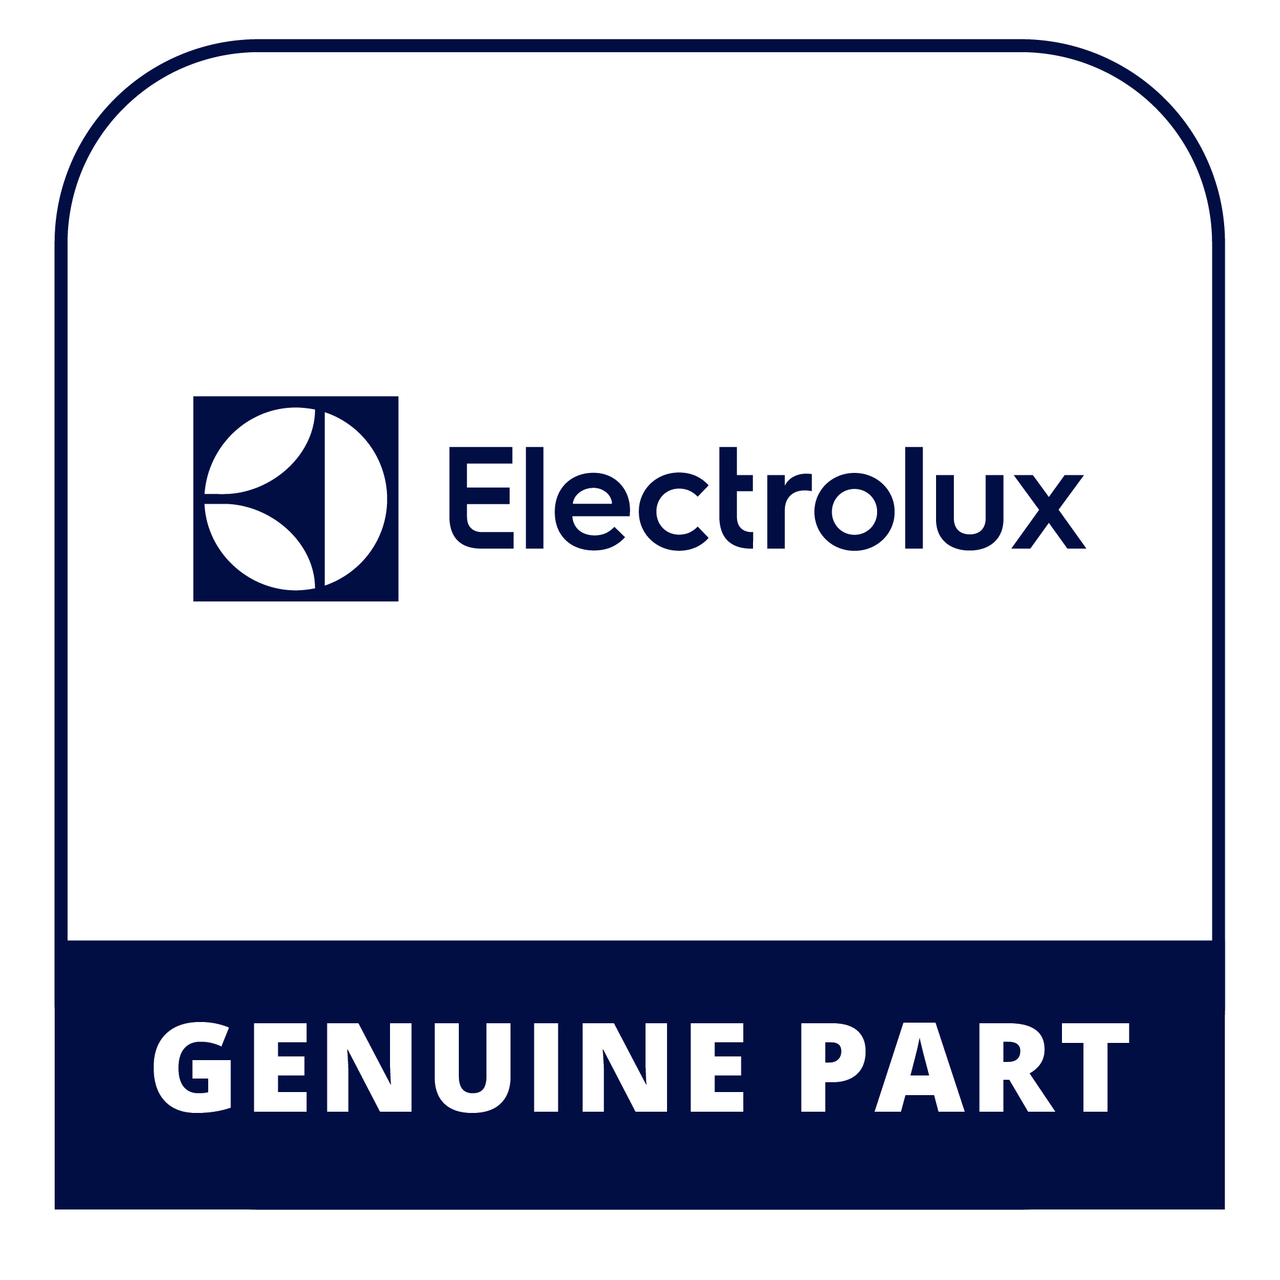 Frigidaire - Electrolux 240435911 Cover - Genuine Electrolux Part